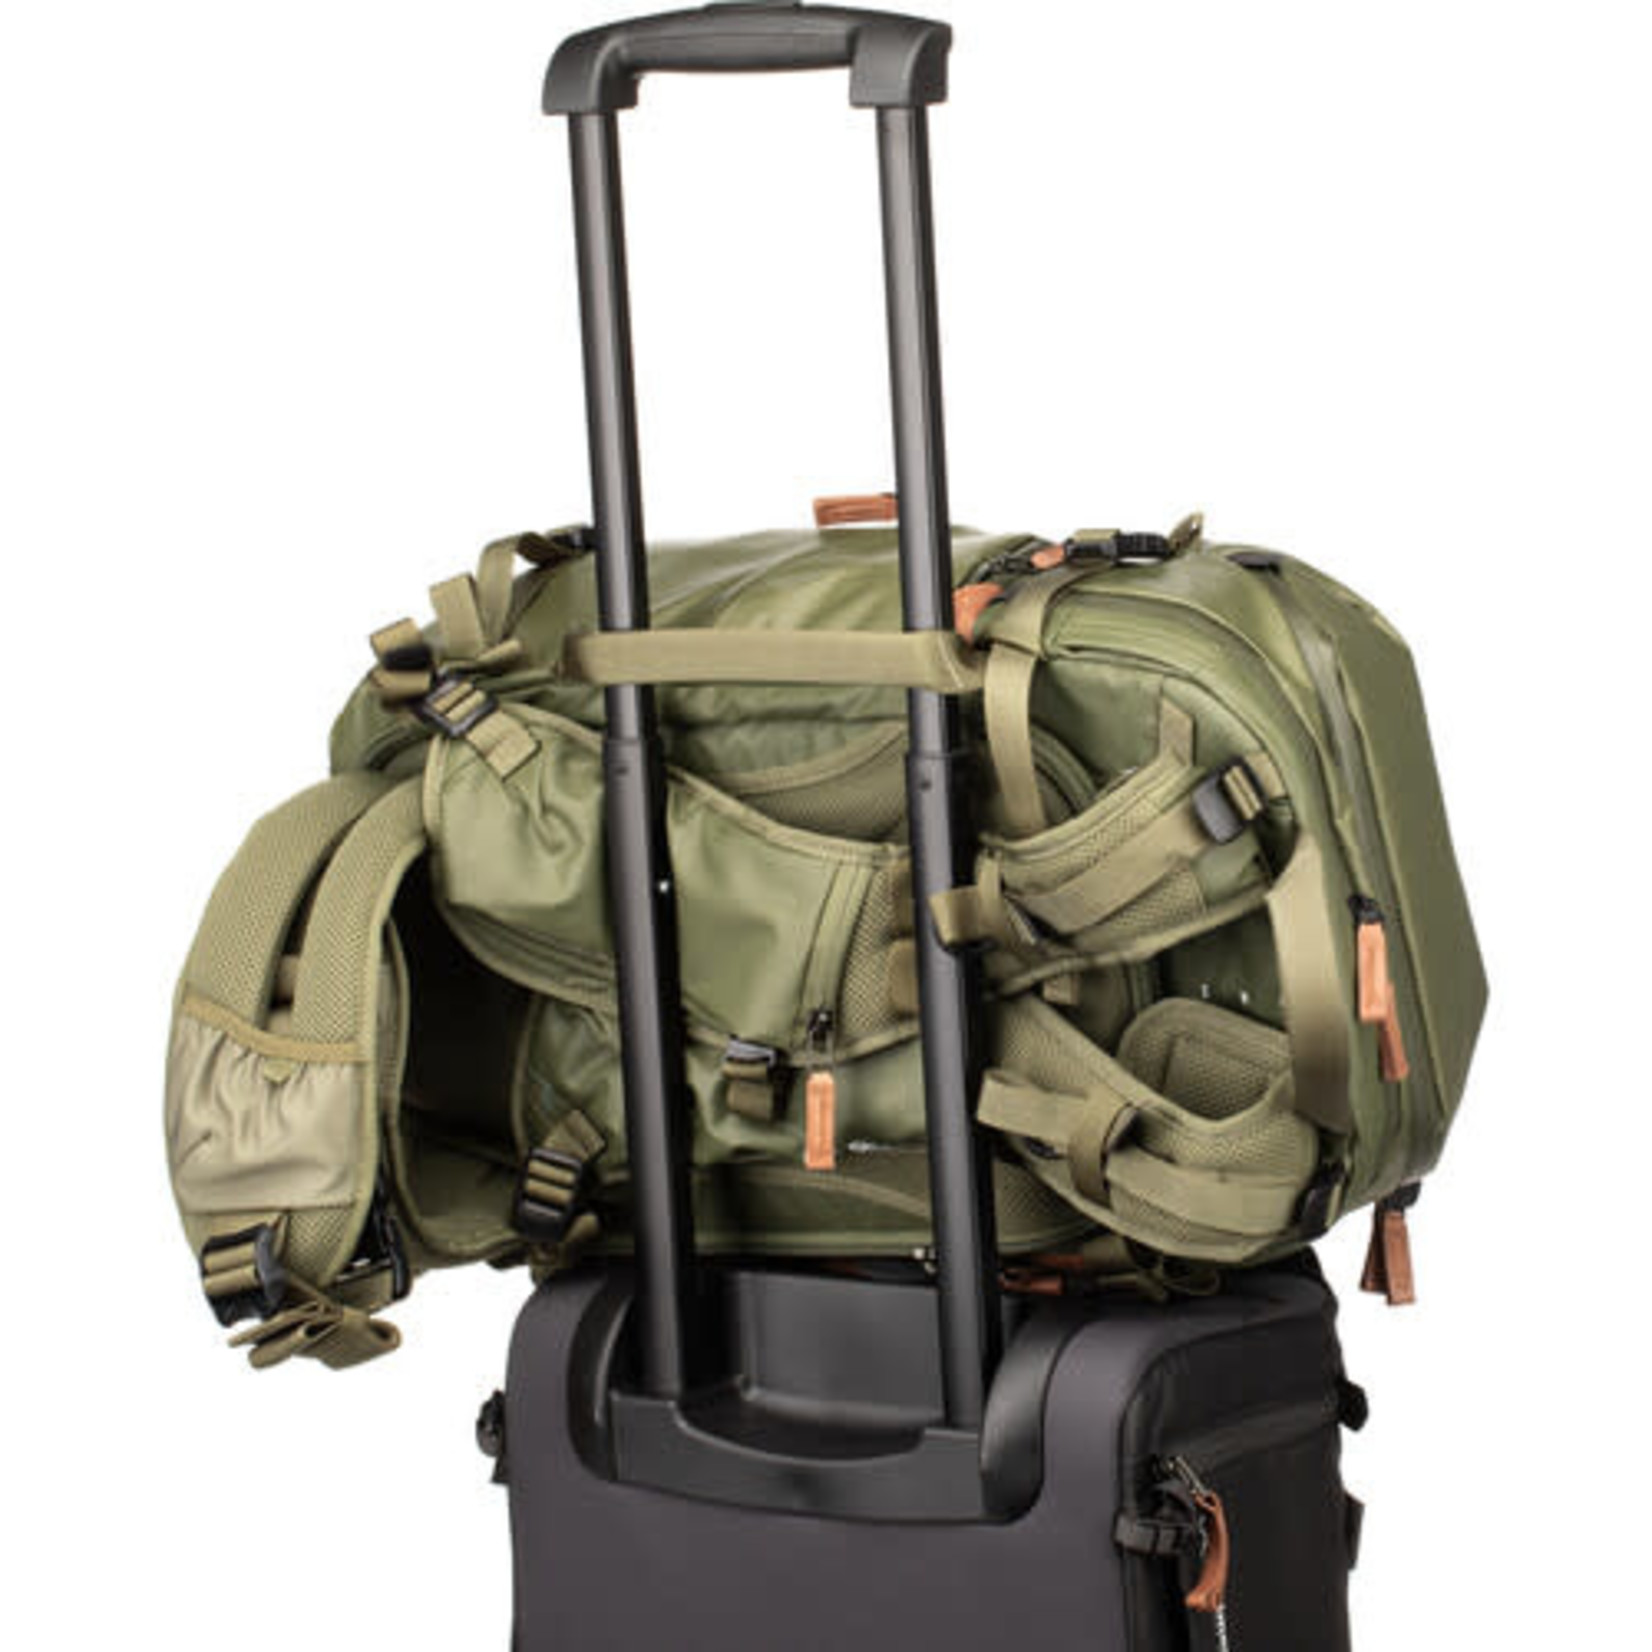 Shimoda Shimoda Designs Explore v2 25 Backpack Photo Starter Kit (Army Green)